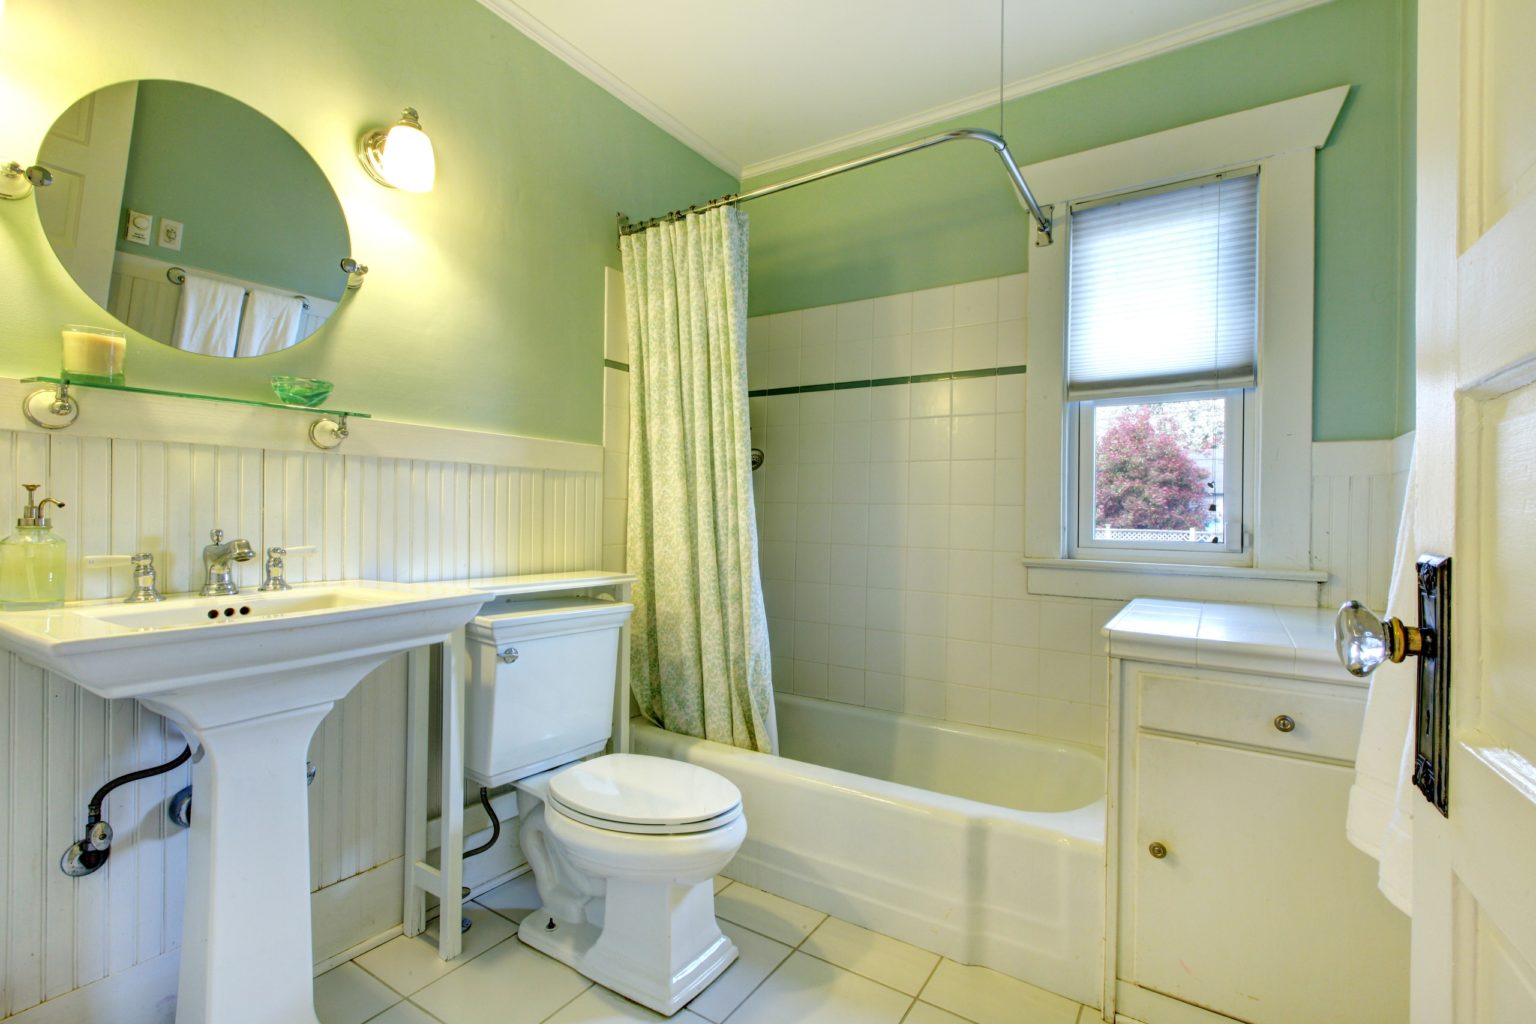 Ванная комната с покрашенными стенами